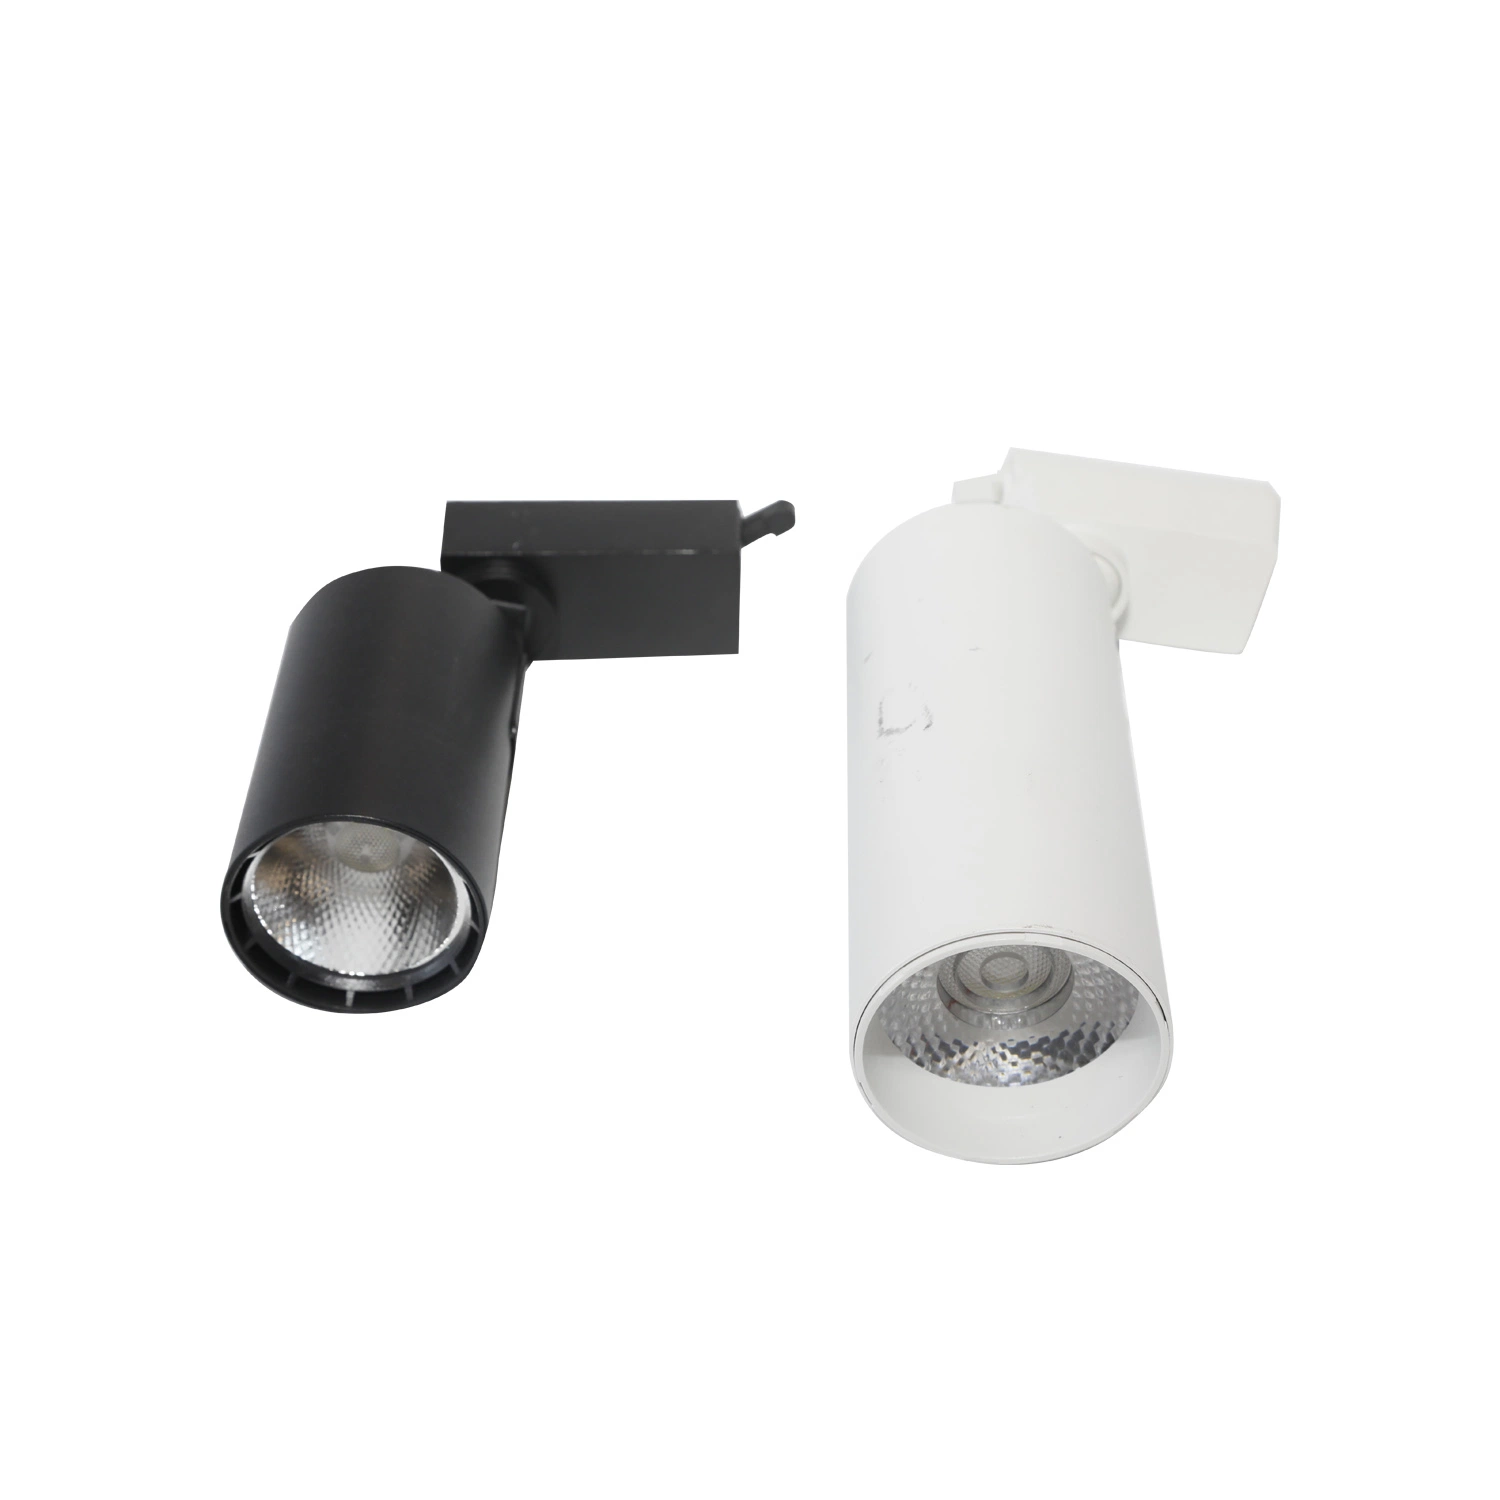 20W COB LED Track Light Shop Focus Lamp Retail Spot Lighting Fixtures Spotlights Linear Magnetic Rail Tracking Lamp